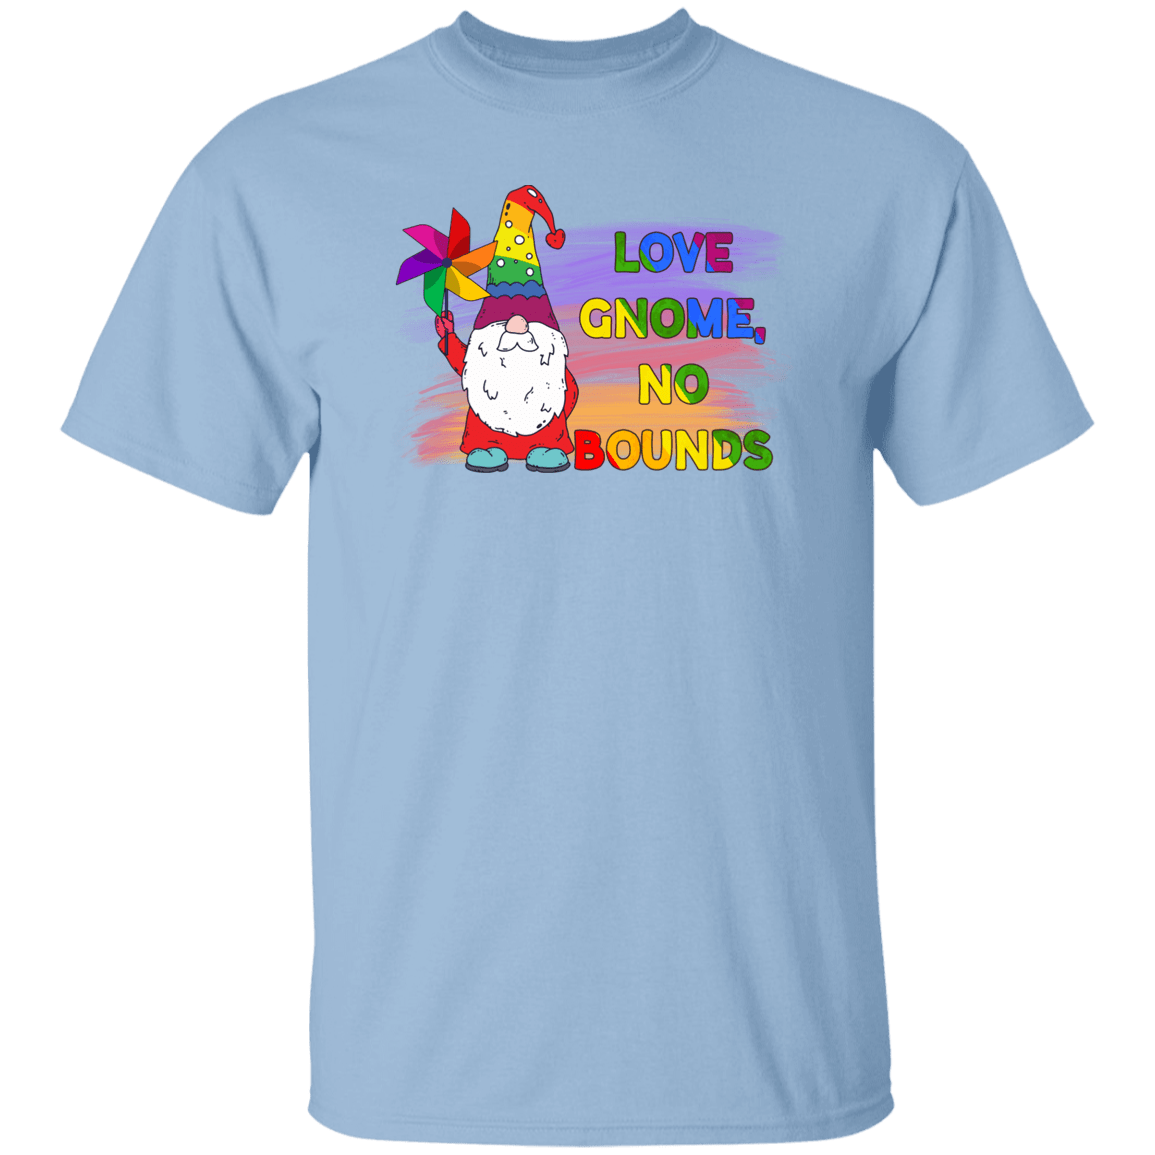 Love Gnome...T-Shirt